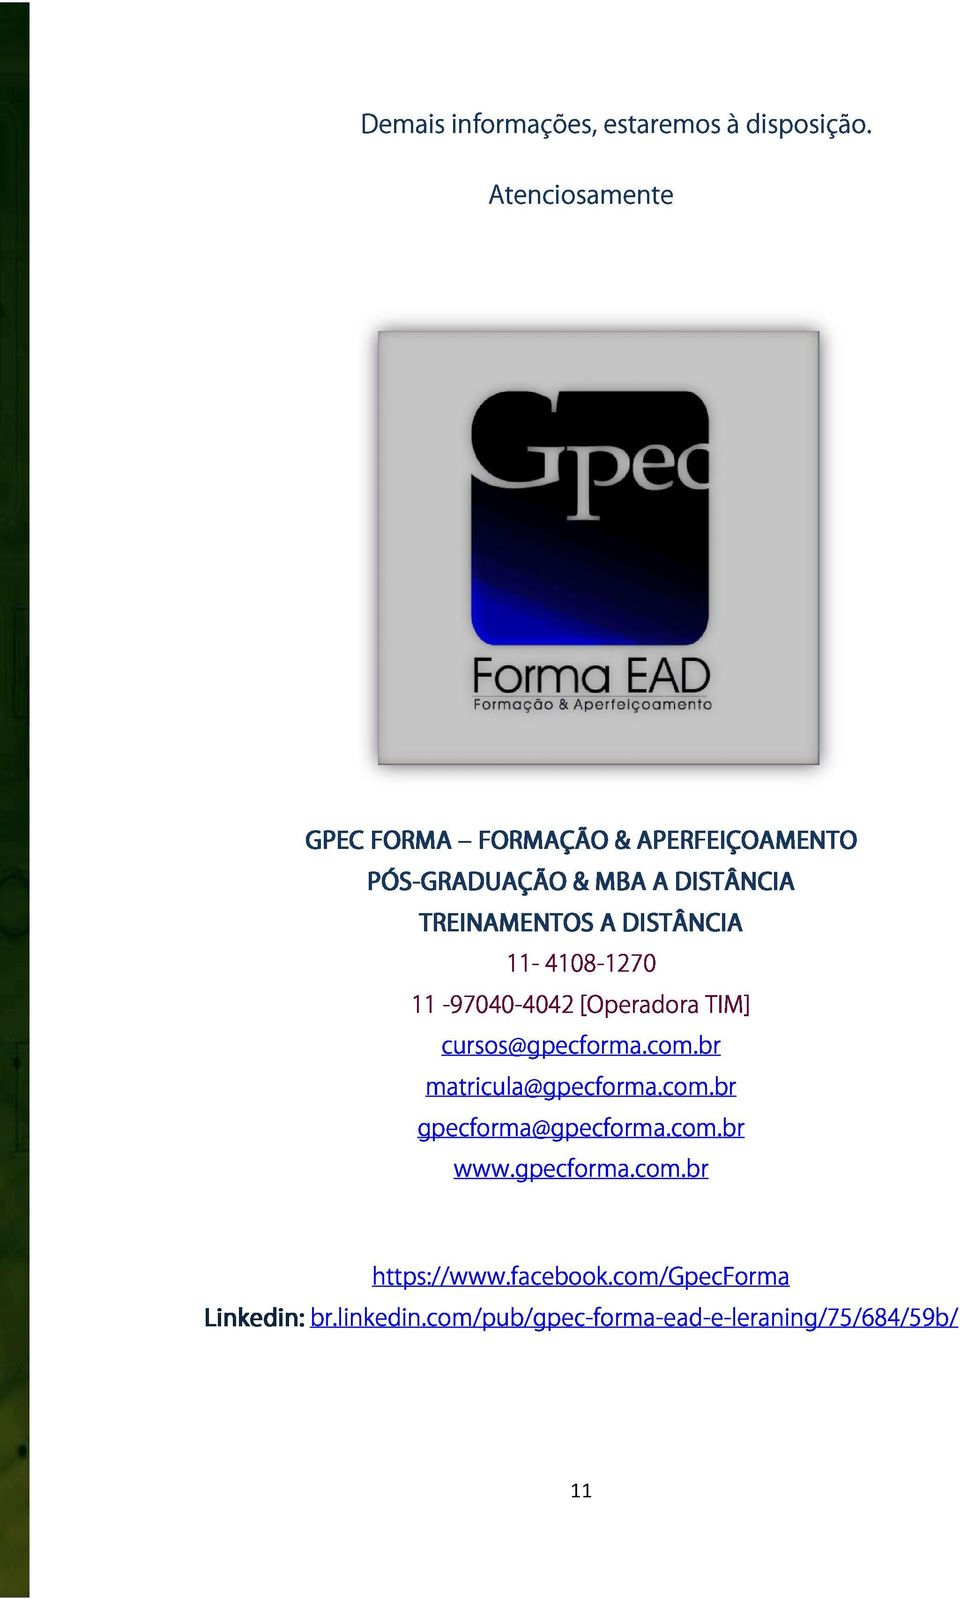 DISTÂNCIA 11-97040-4042[Operadora TIM] gpecforma@gpecforma.com.br matricula@gpecforma.com.br cursos@gpecforma.